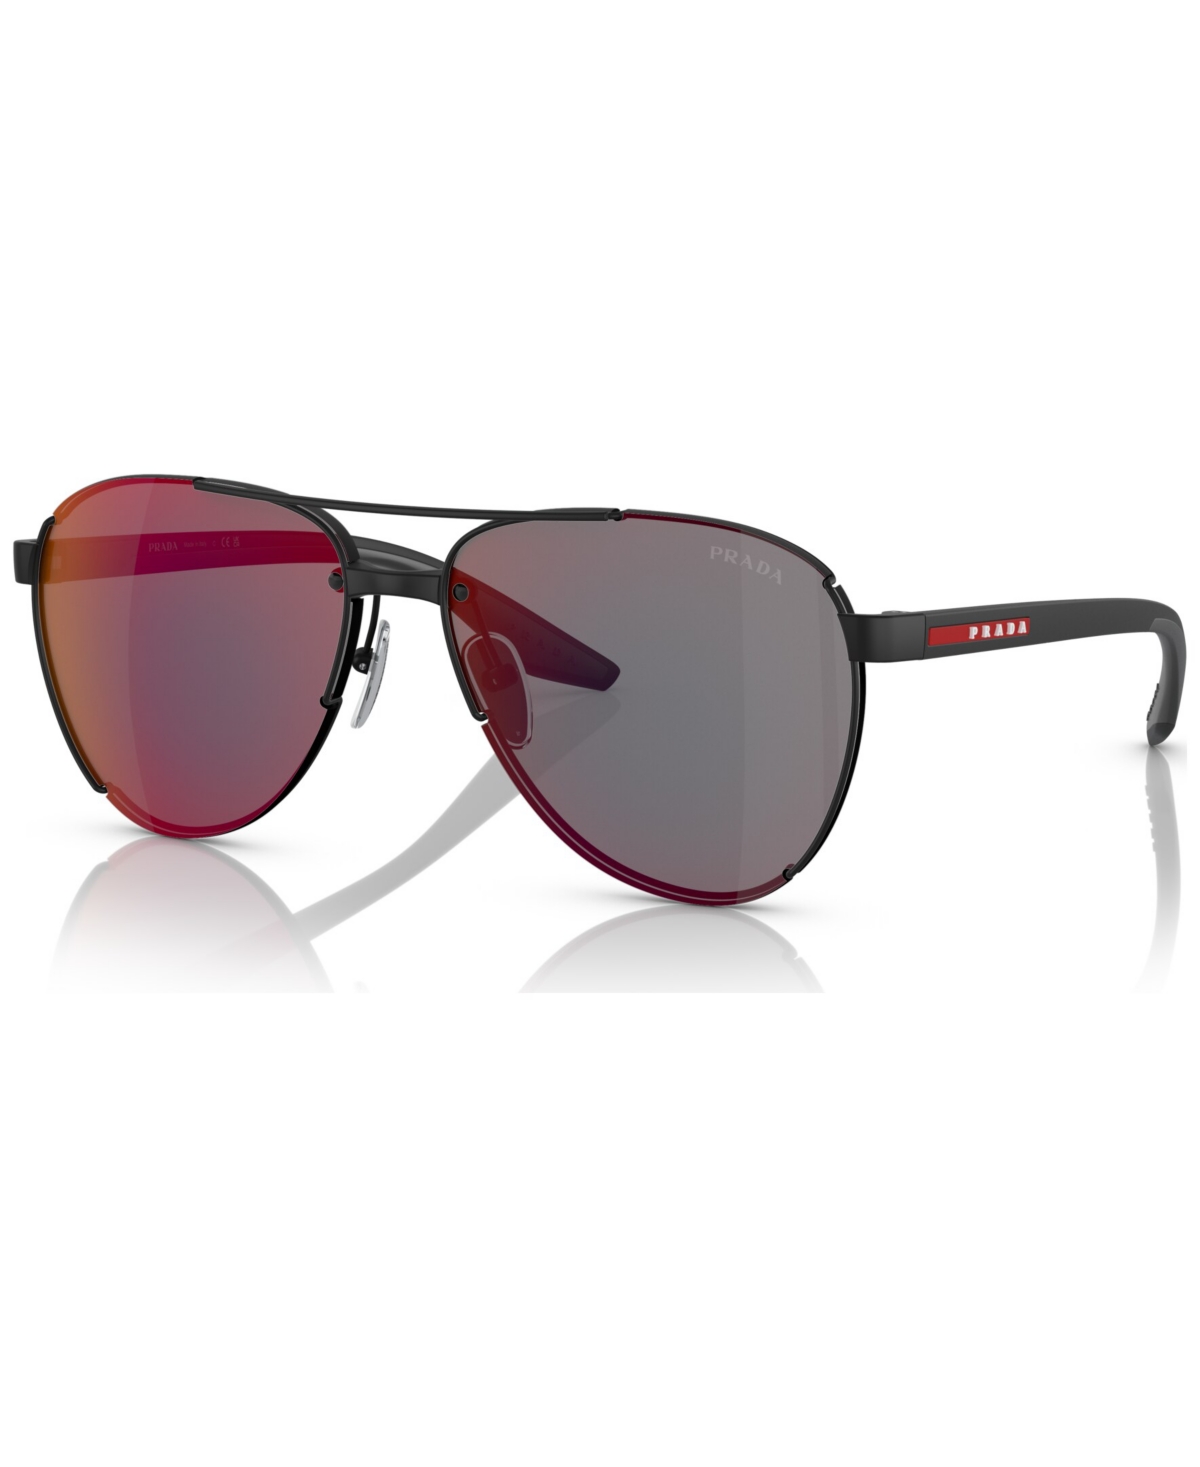 Prada Men's Sunglasses, Ps 51ys61-y In Matte Black